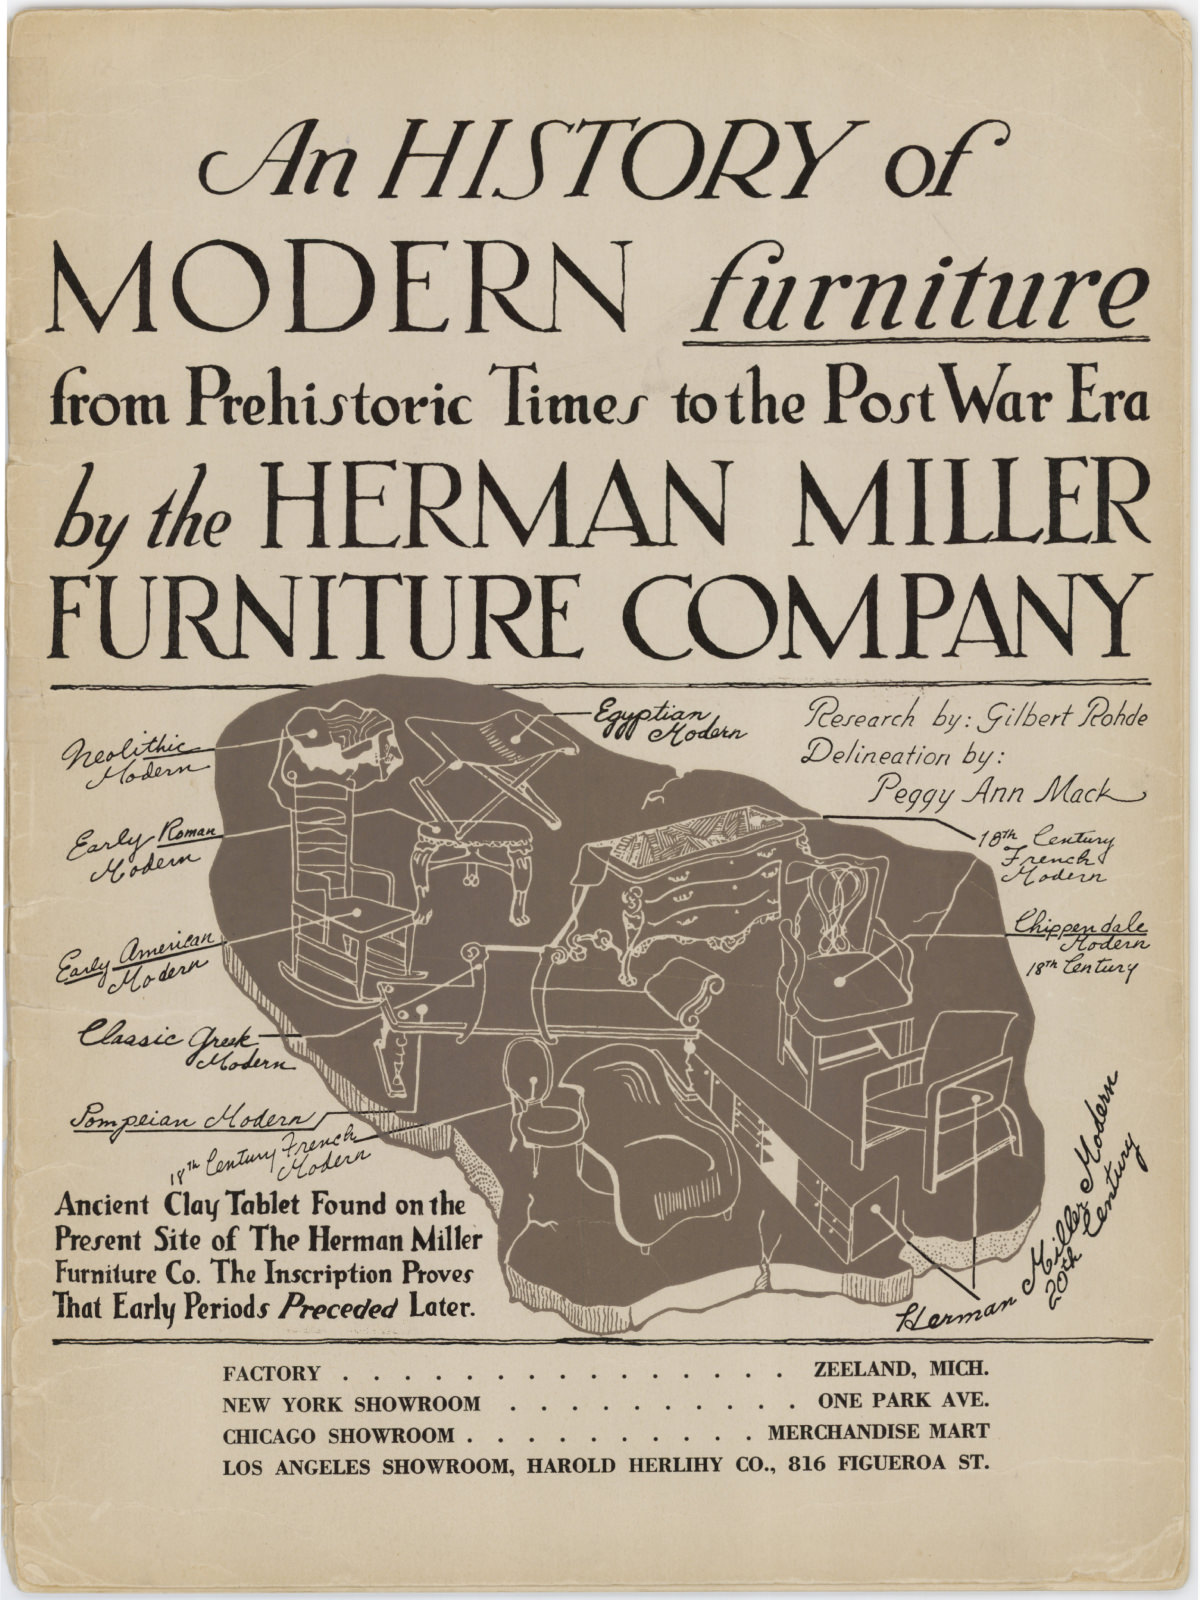 Herman Miller促销手册，以与现代家具并列摆放的仿古家具黑白插图为主题。倡导现代设计的文字。